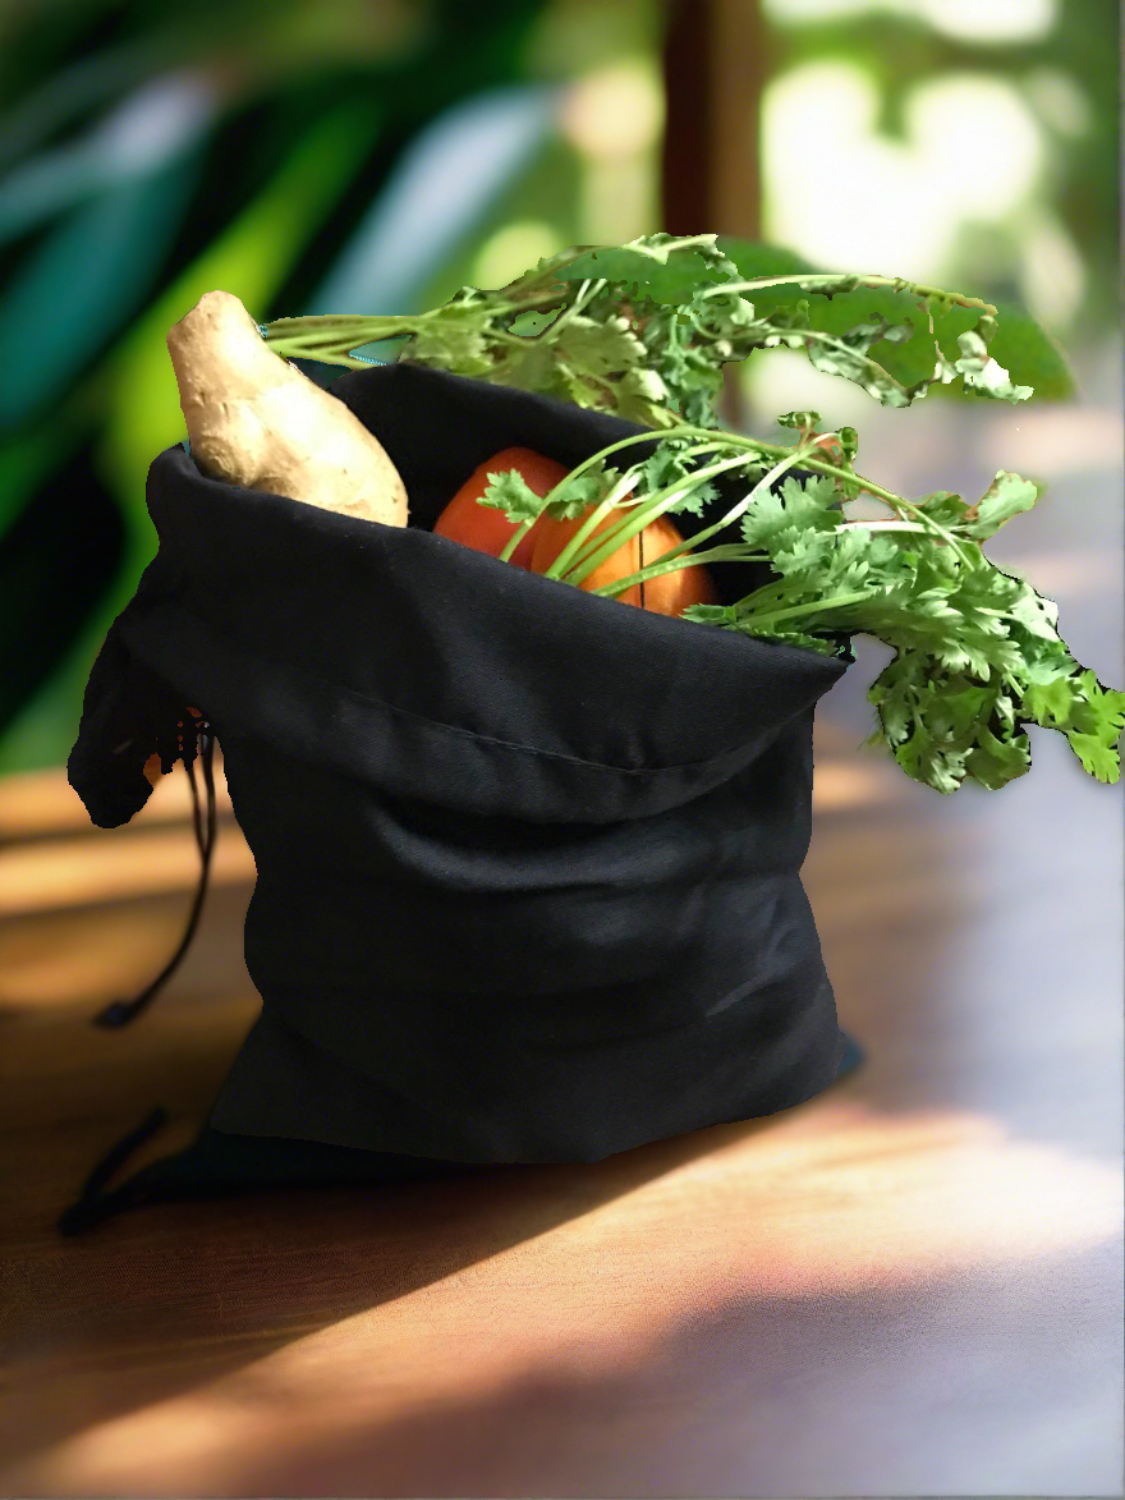 10x12 Inches Reusable Eco-Friendly Cotton Single Drawstring Bags Black Color